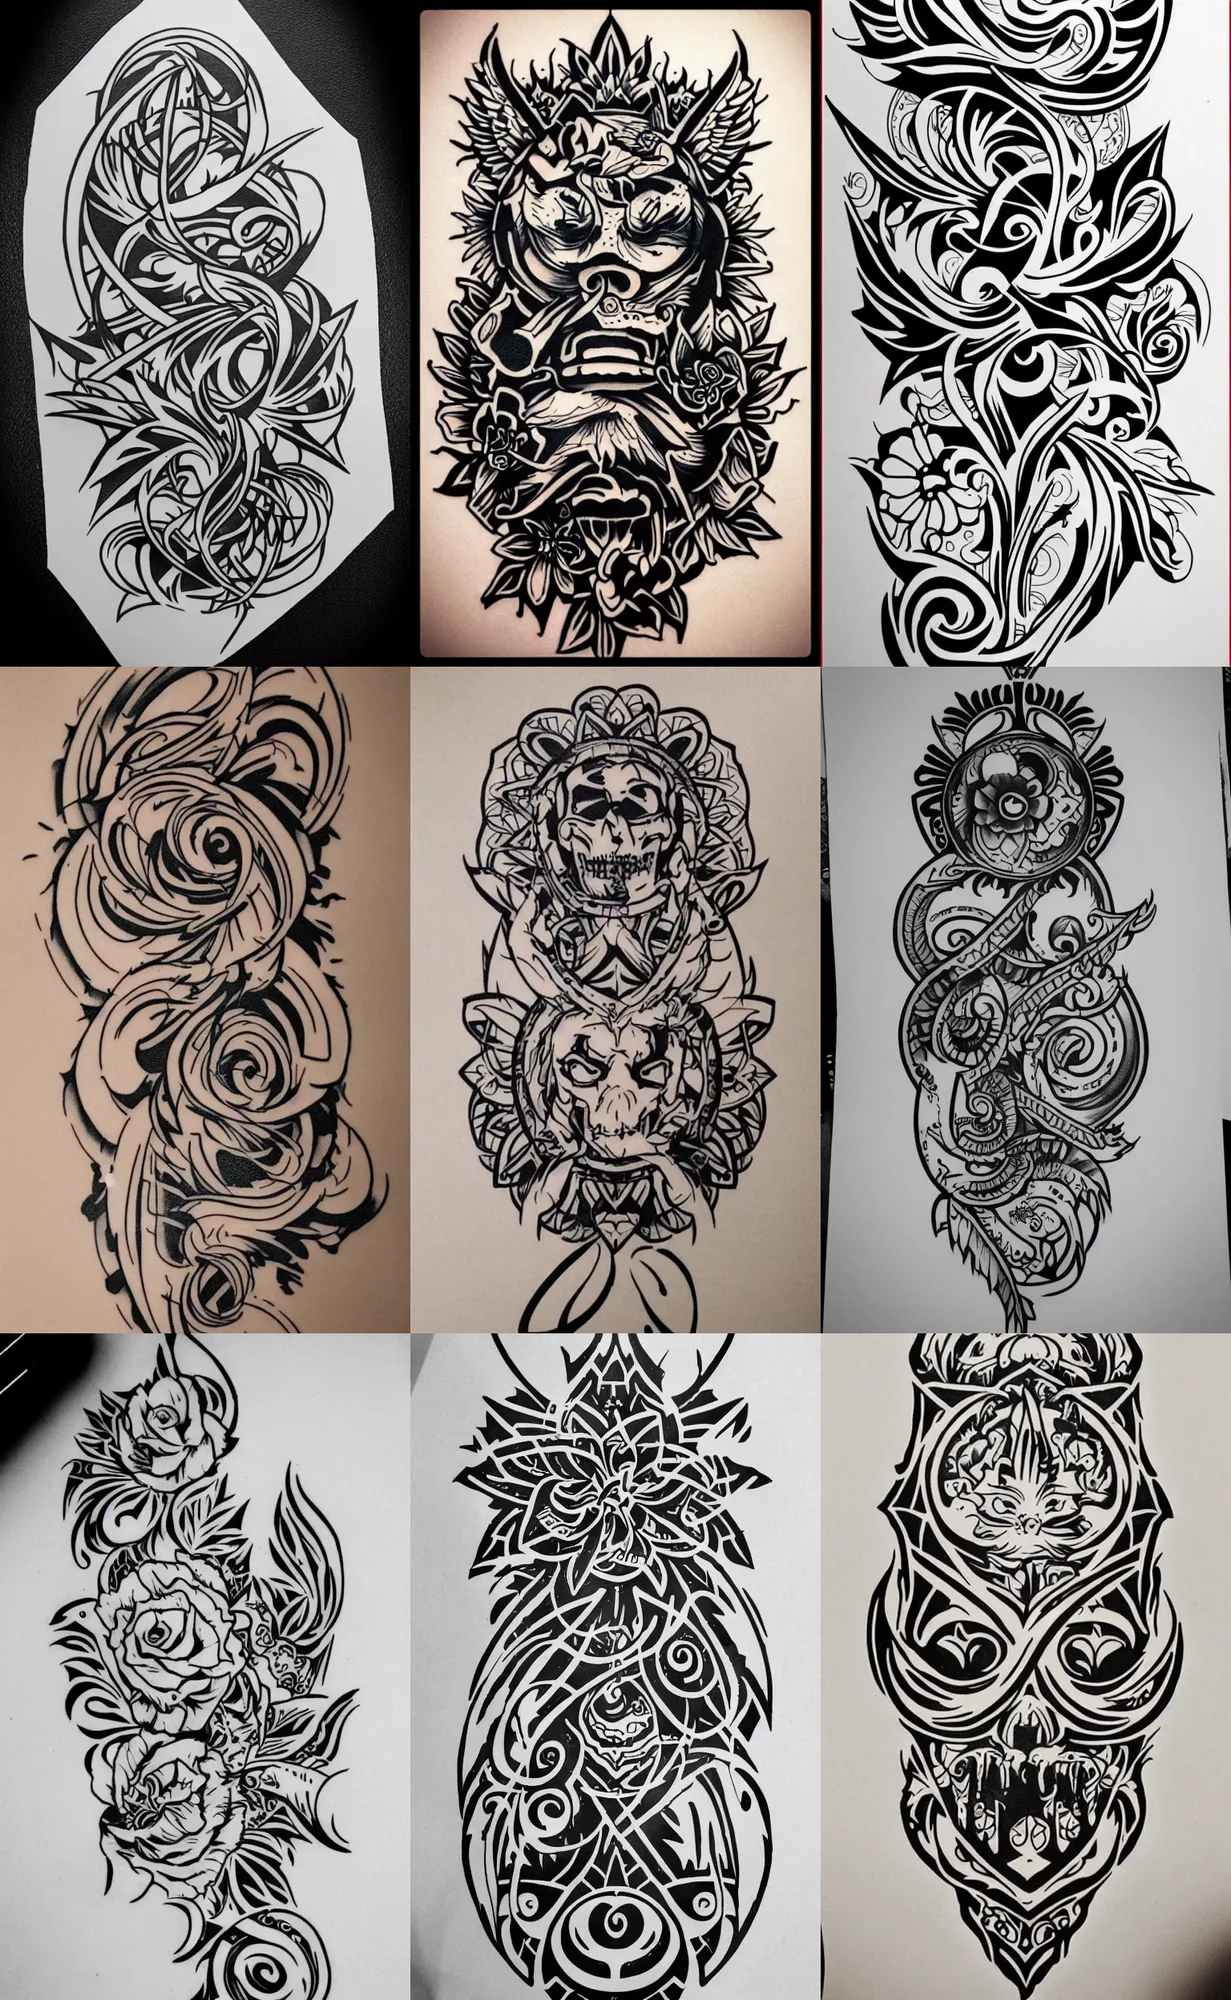 Choosing a chest tattoo design. : r/TattooDesigns